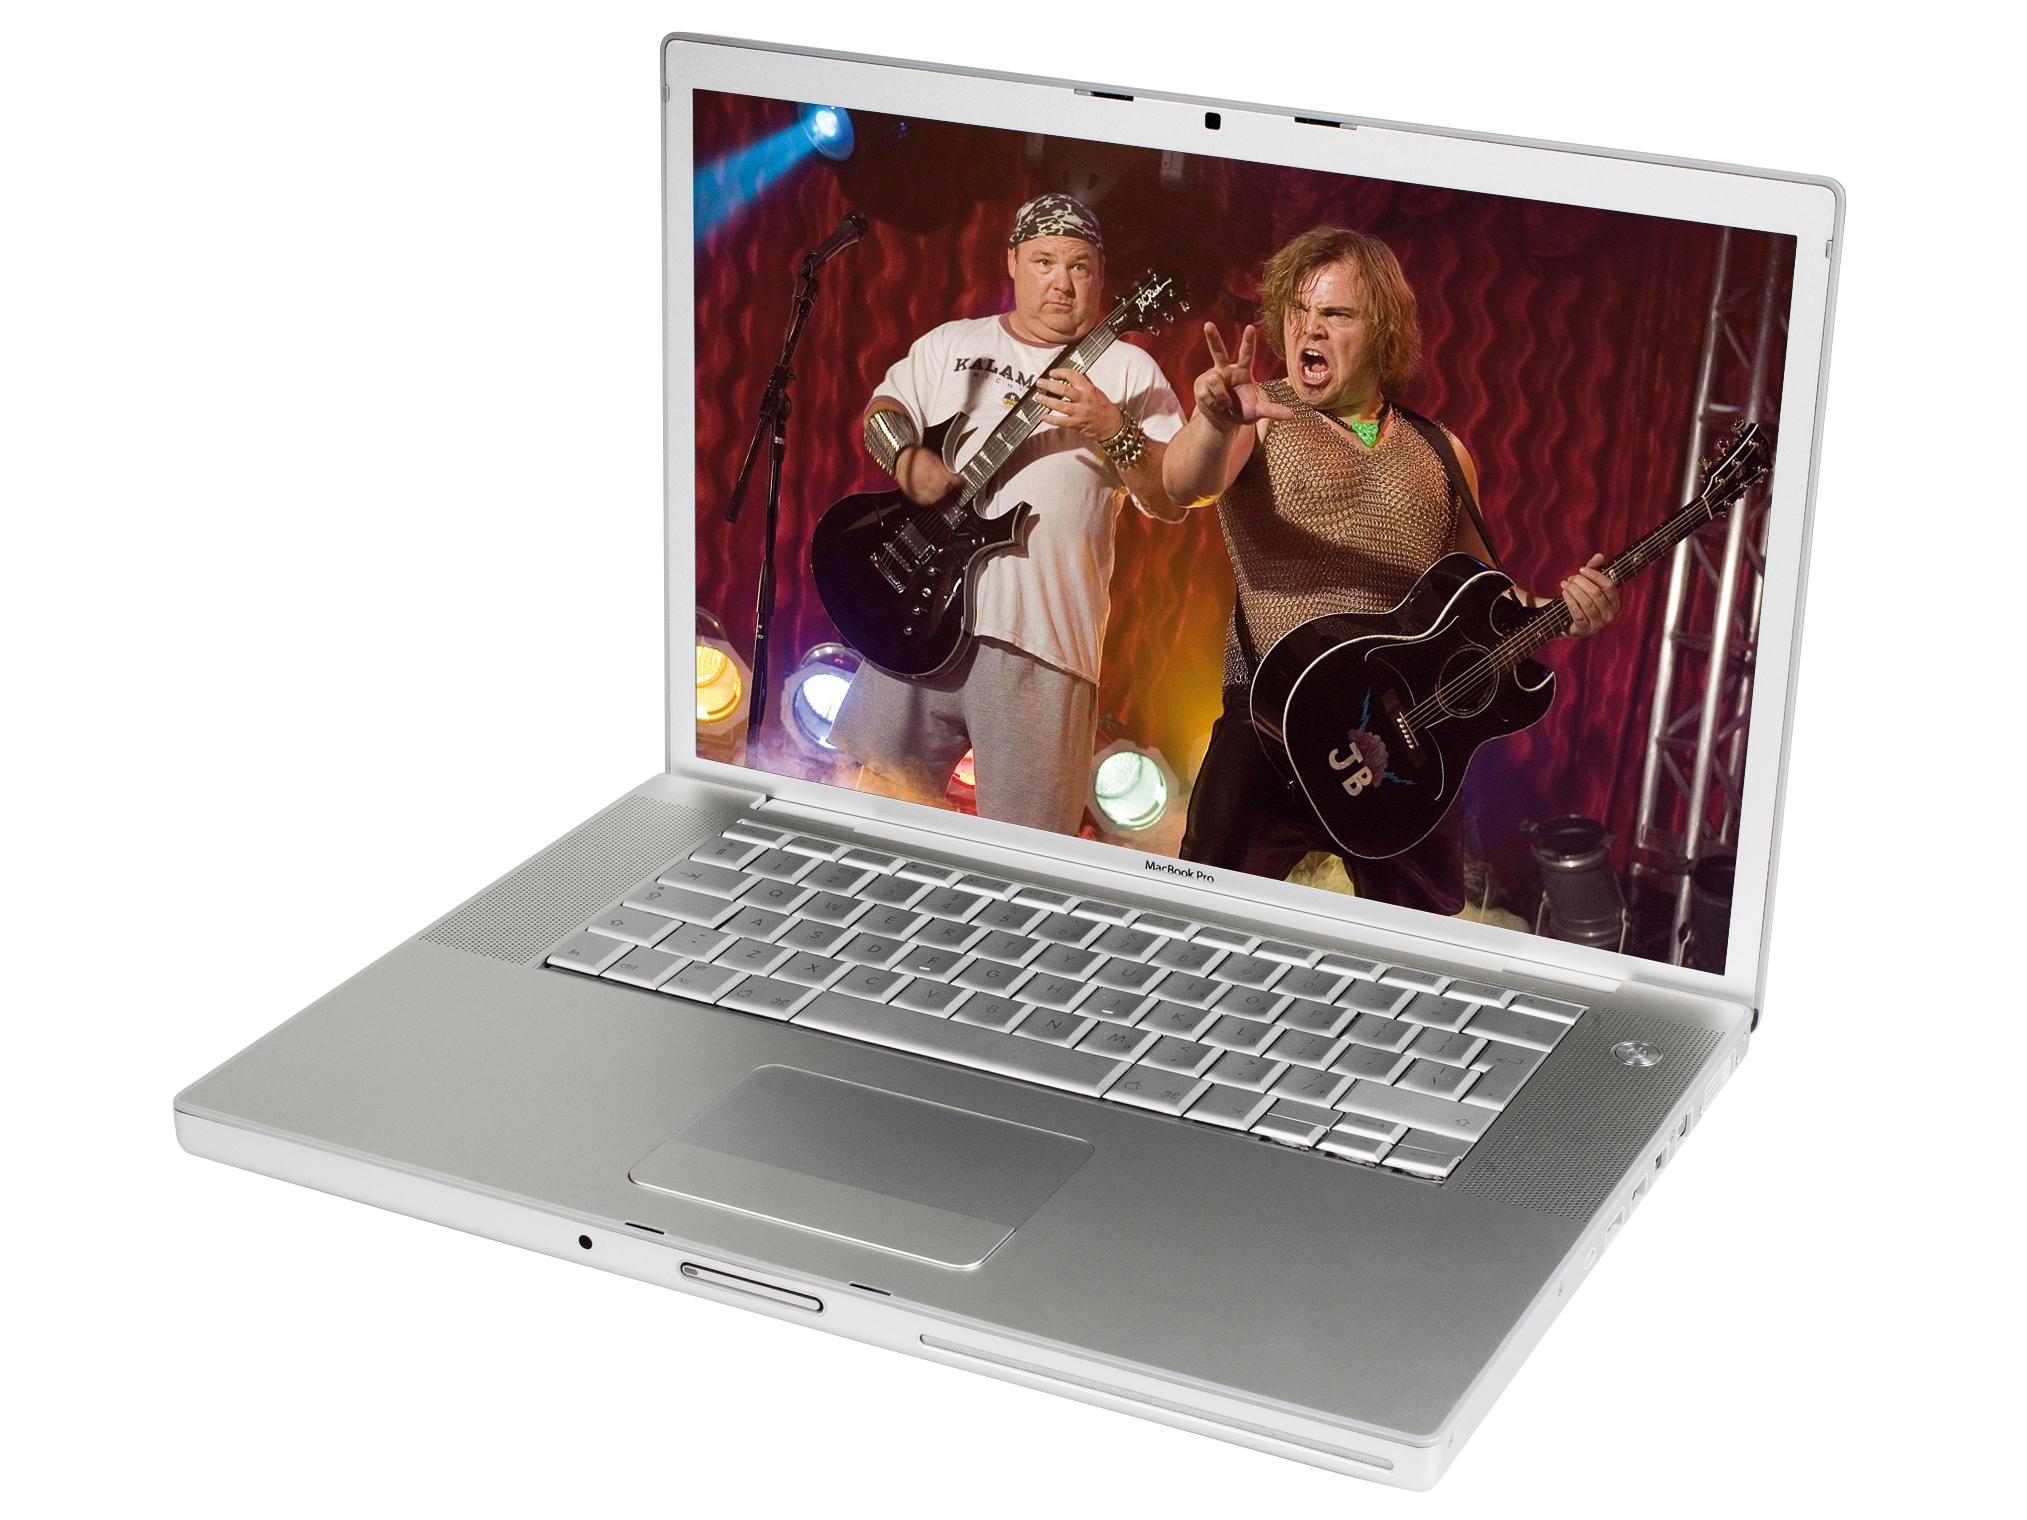 Apple MacBook Pro 15inch review TechRadar